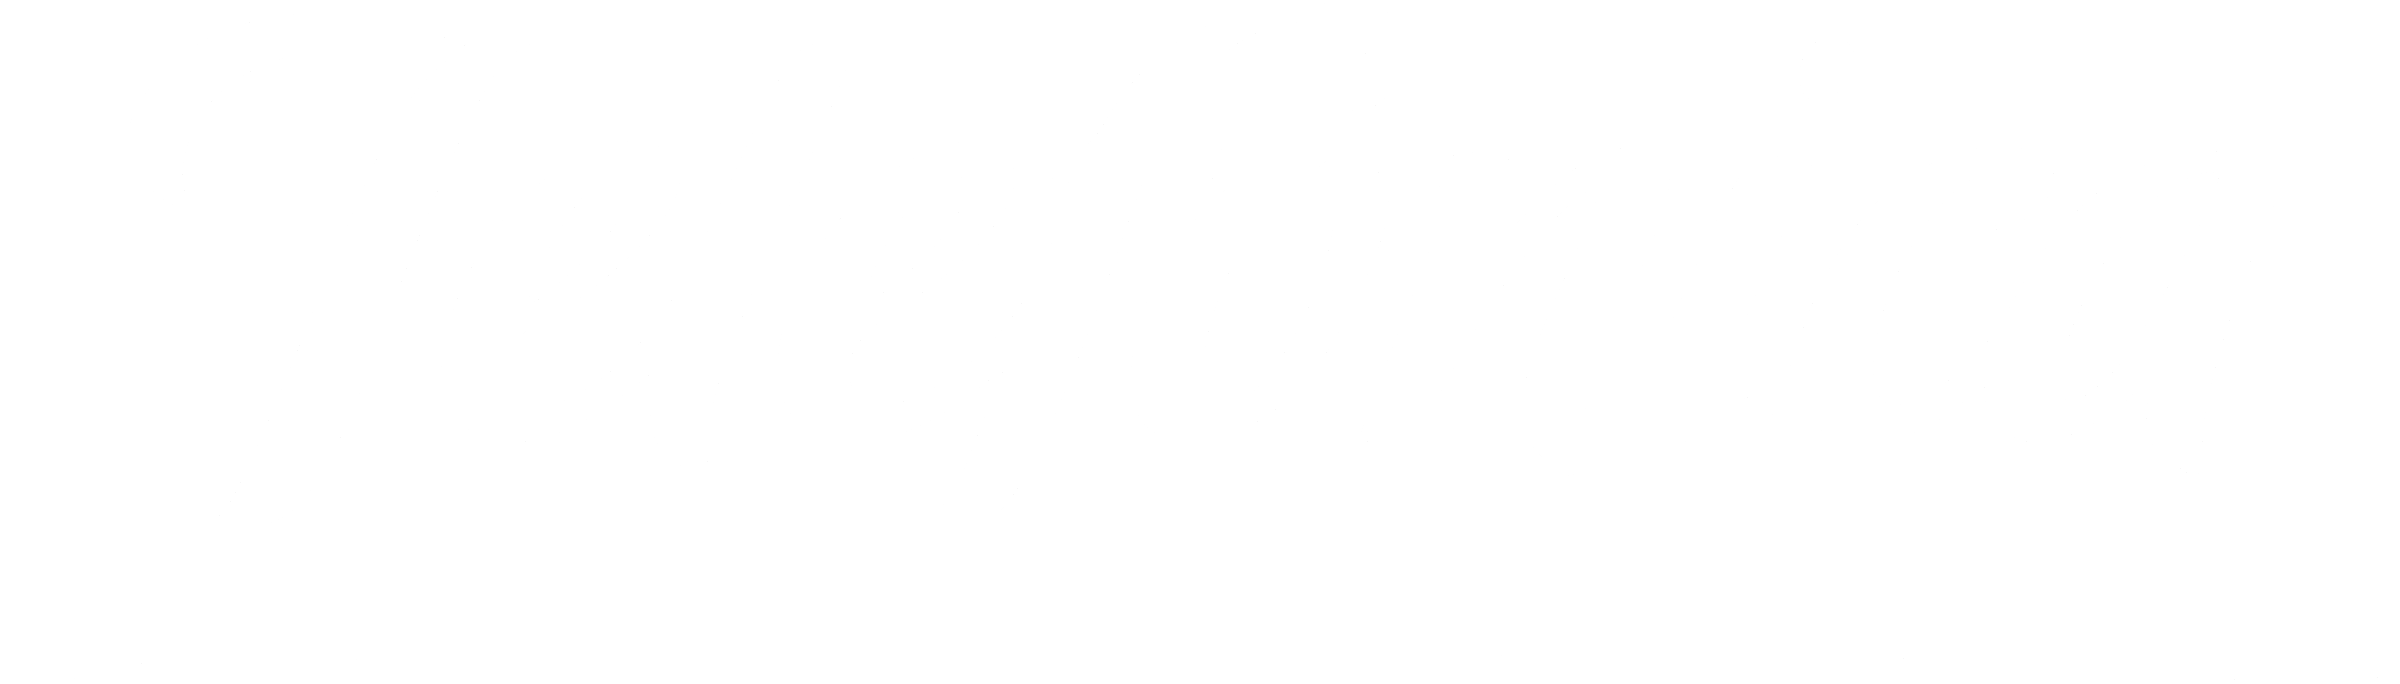 telefonica  logo black and white